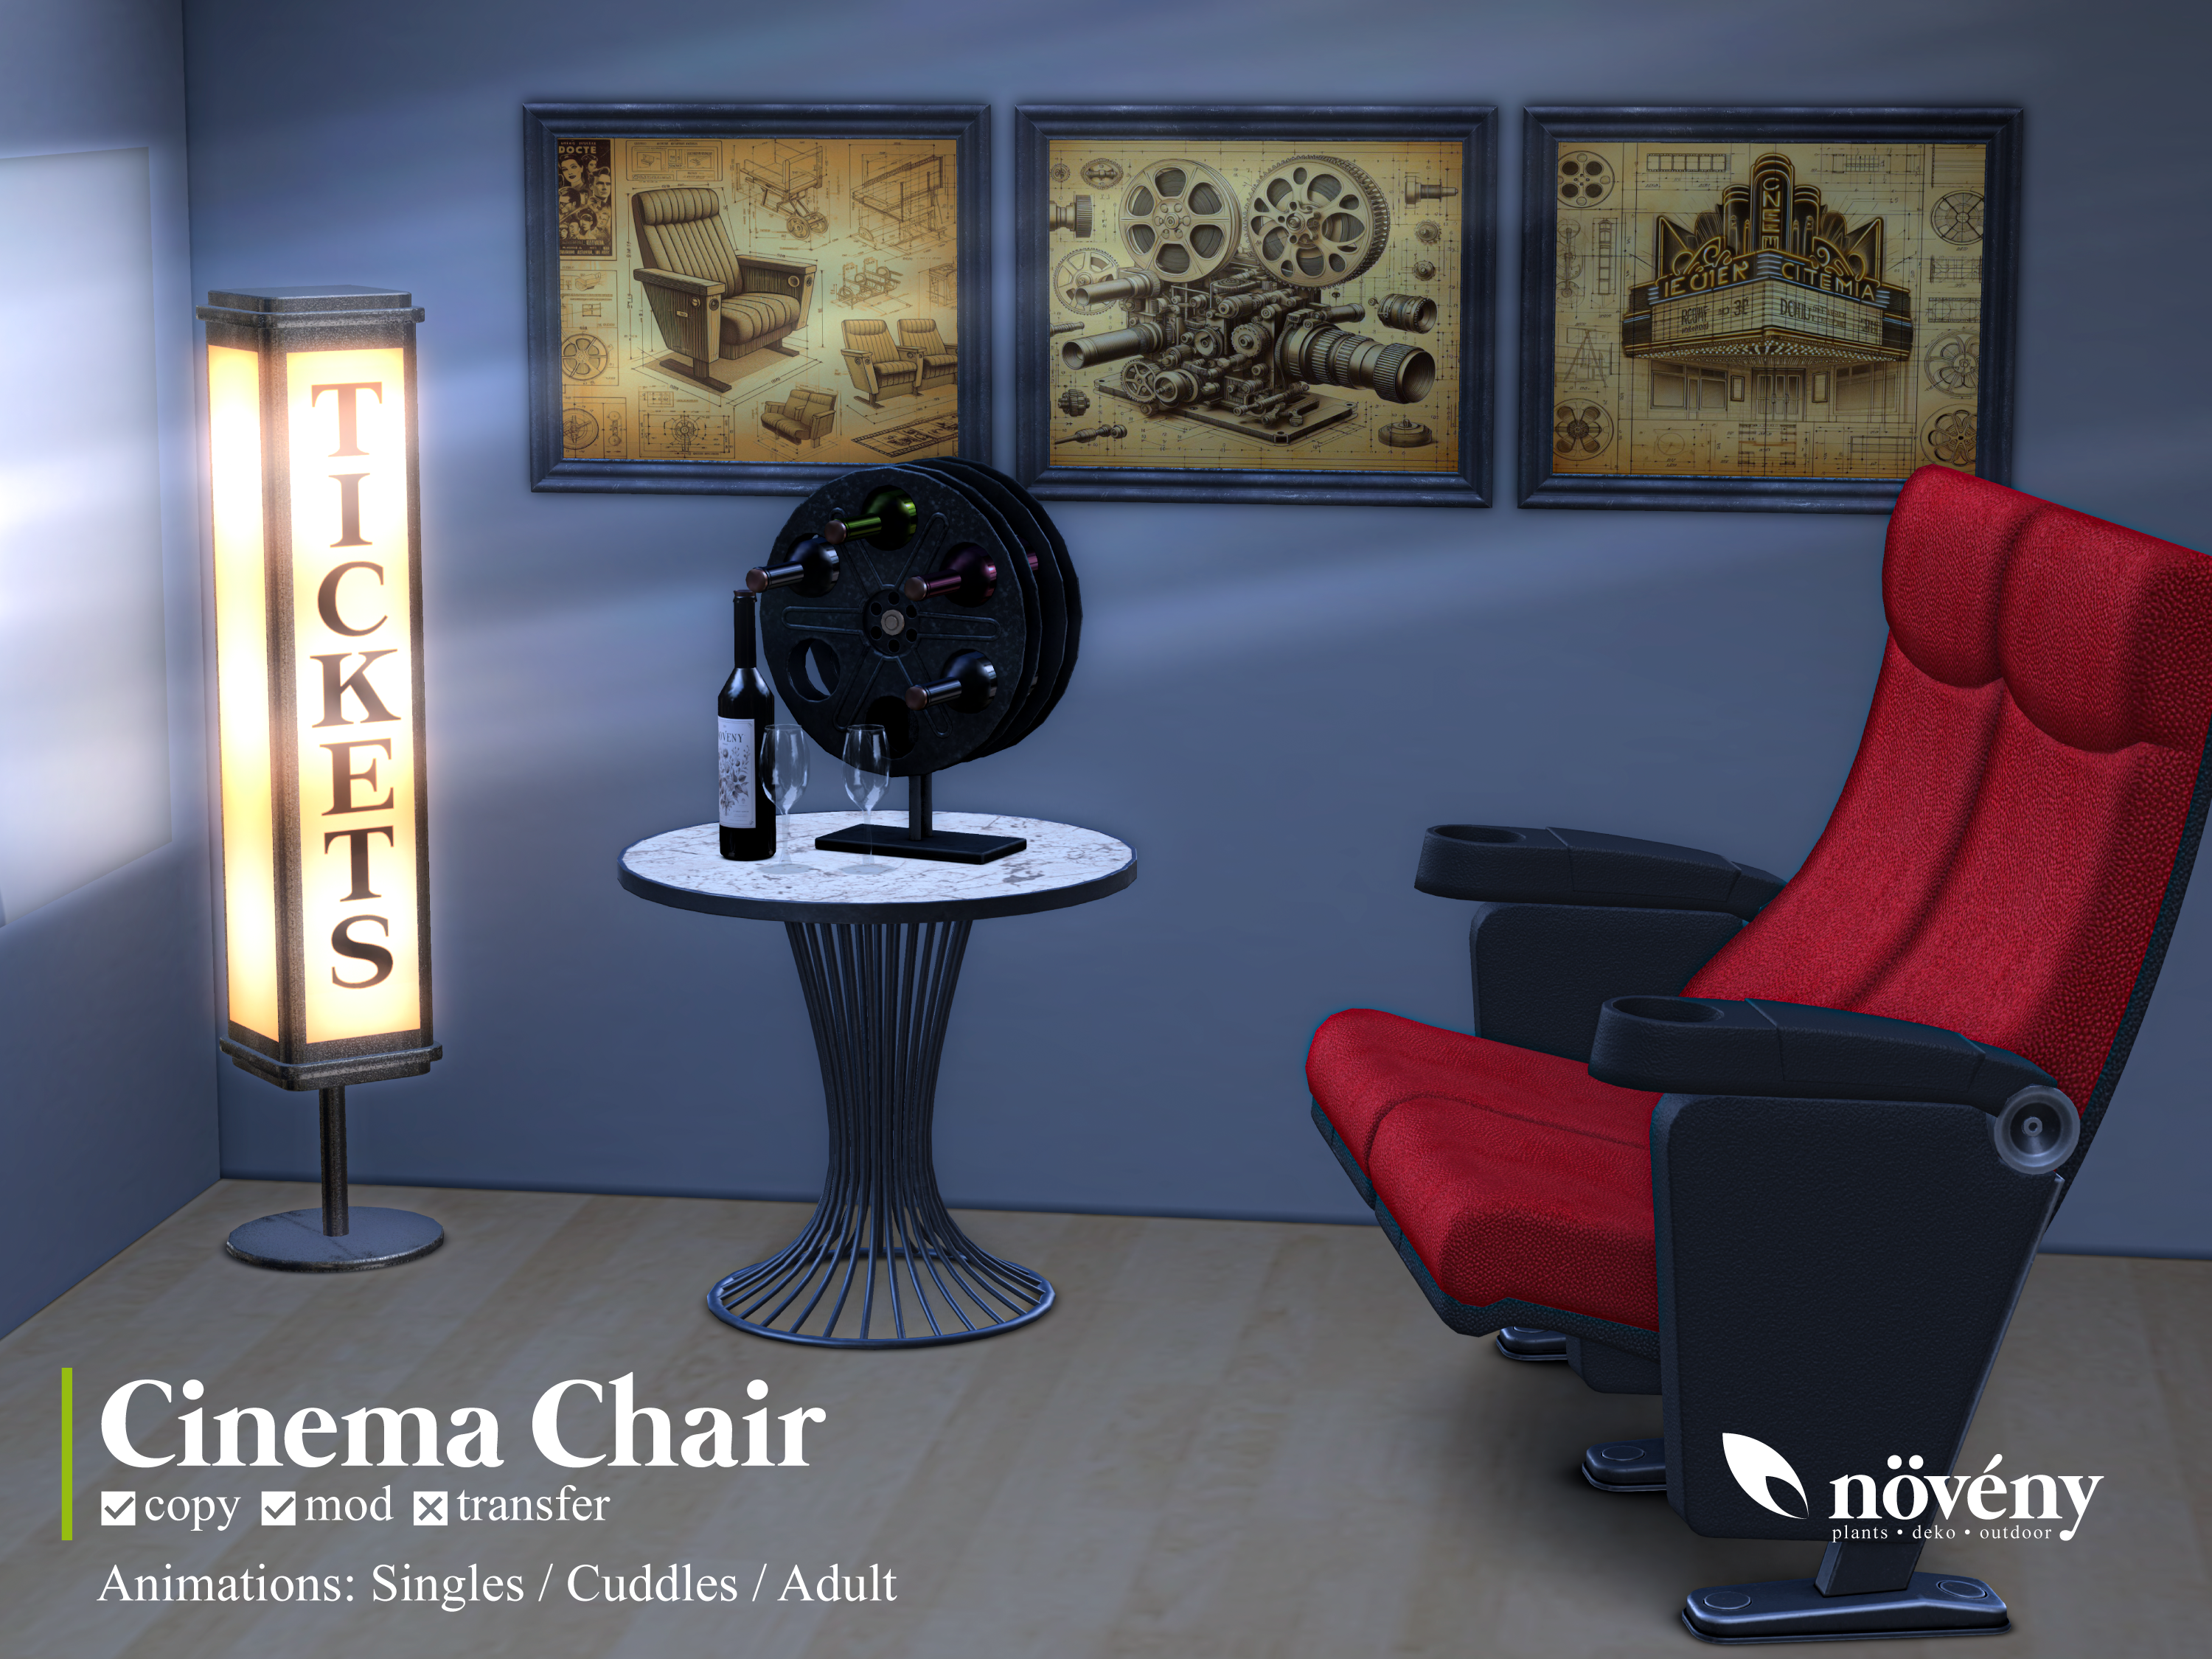 Noveny – Cinema Chair